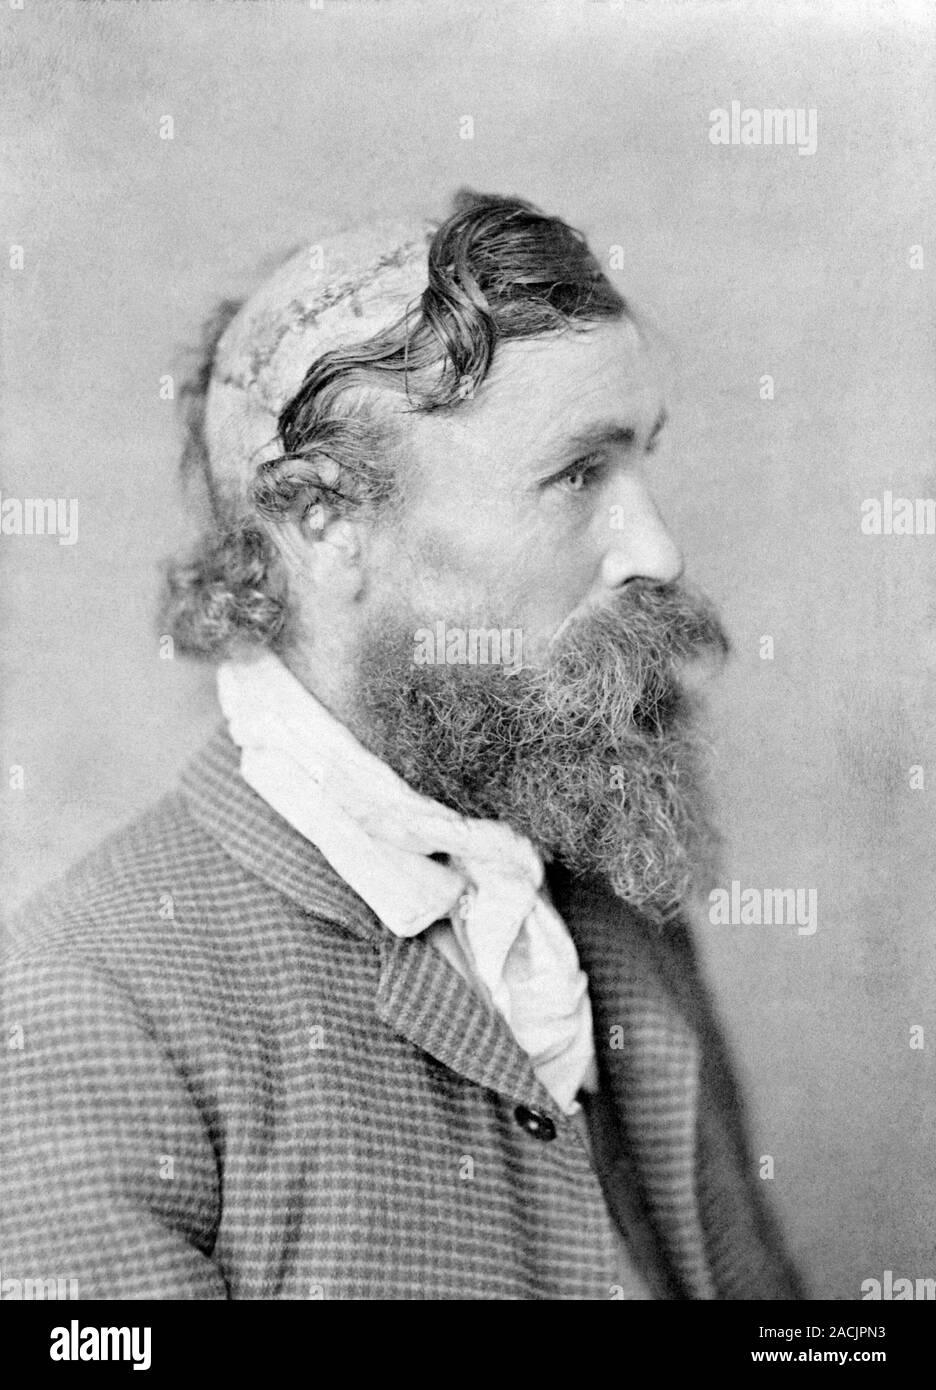 Robert McGee, scalping victim. This photograph, taken circa 1890, shows ...